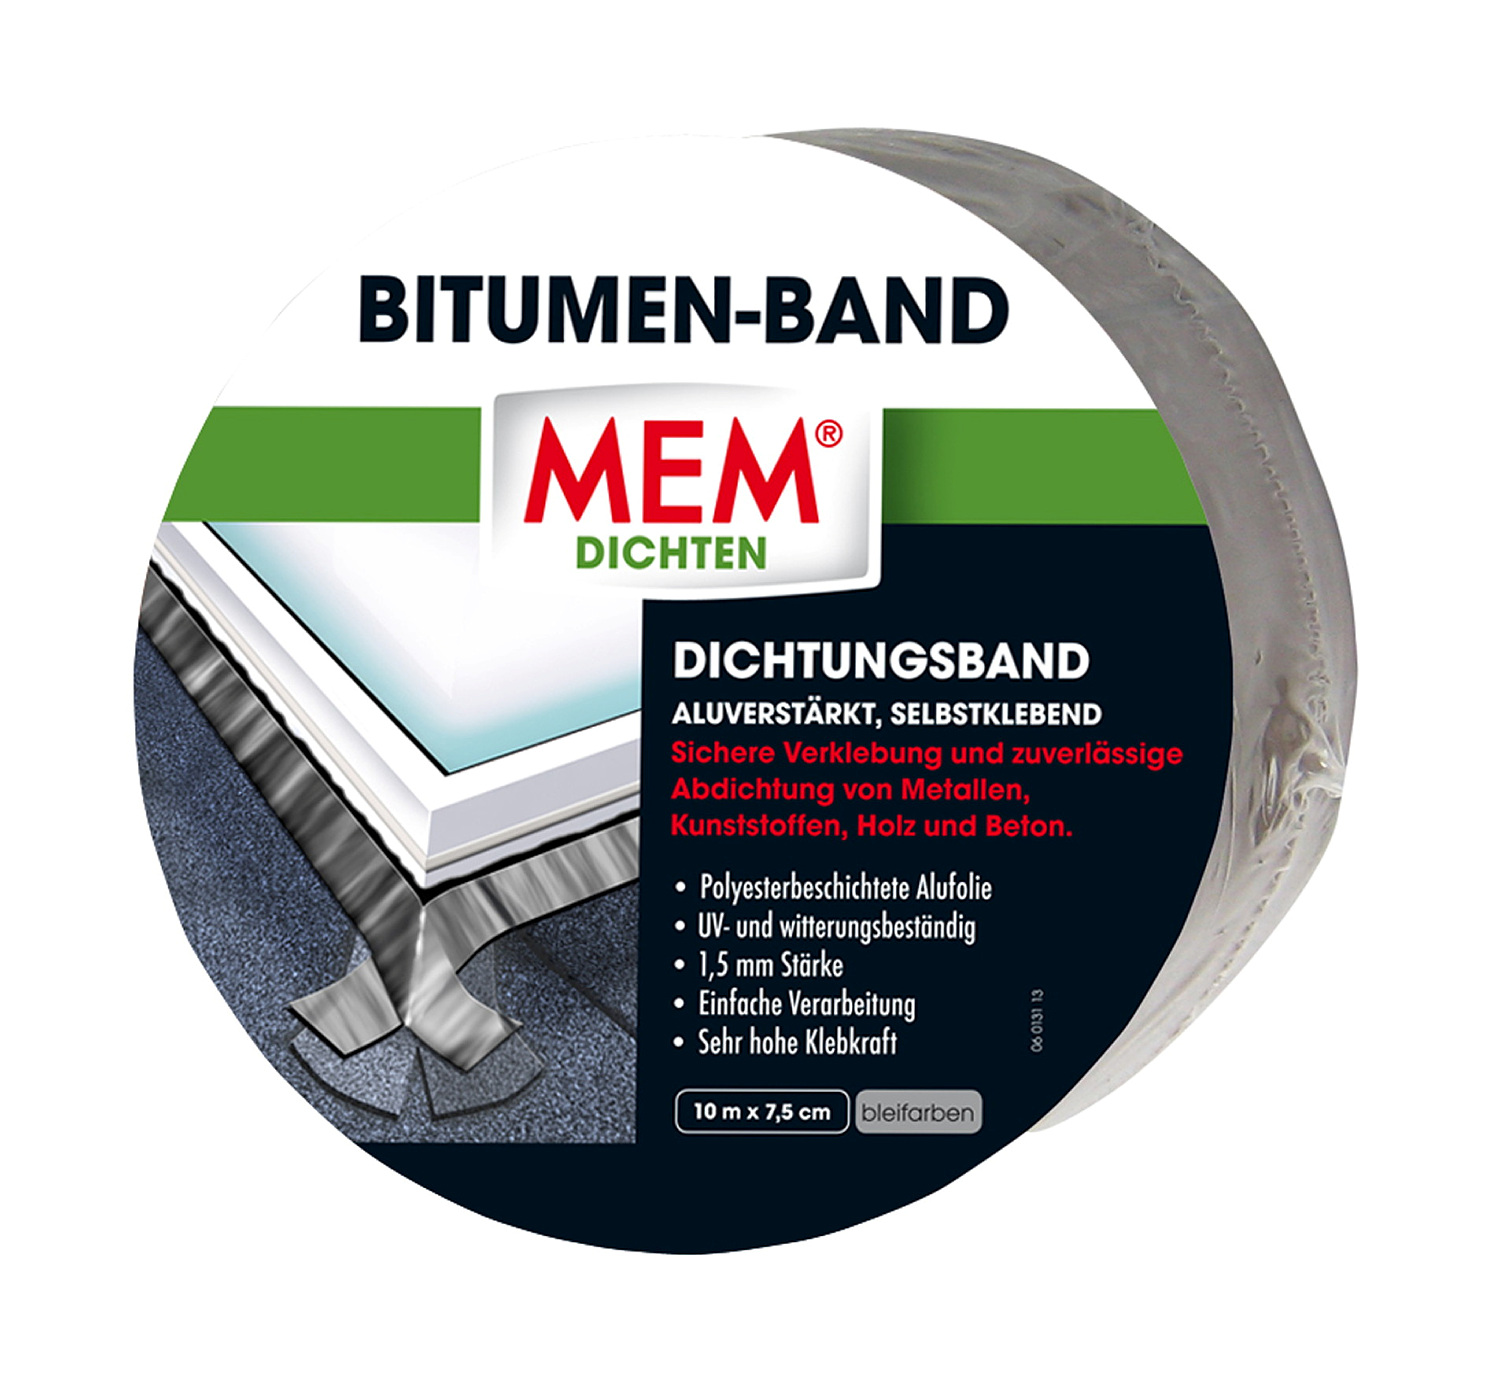 Bitumen-Band blei 7,5 cm x 10 m